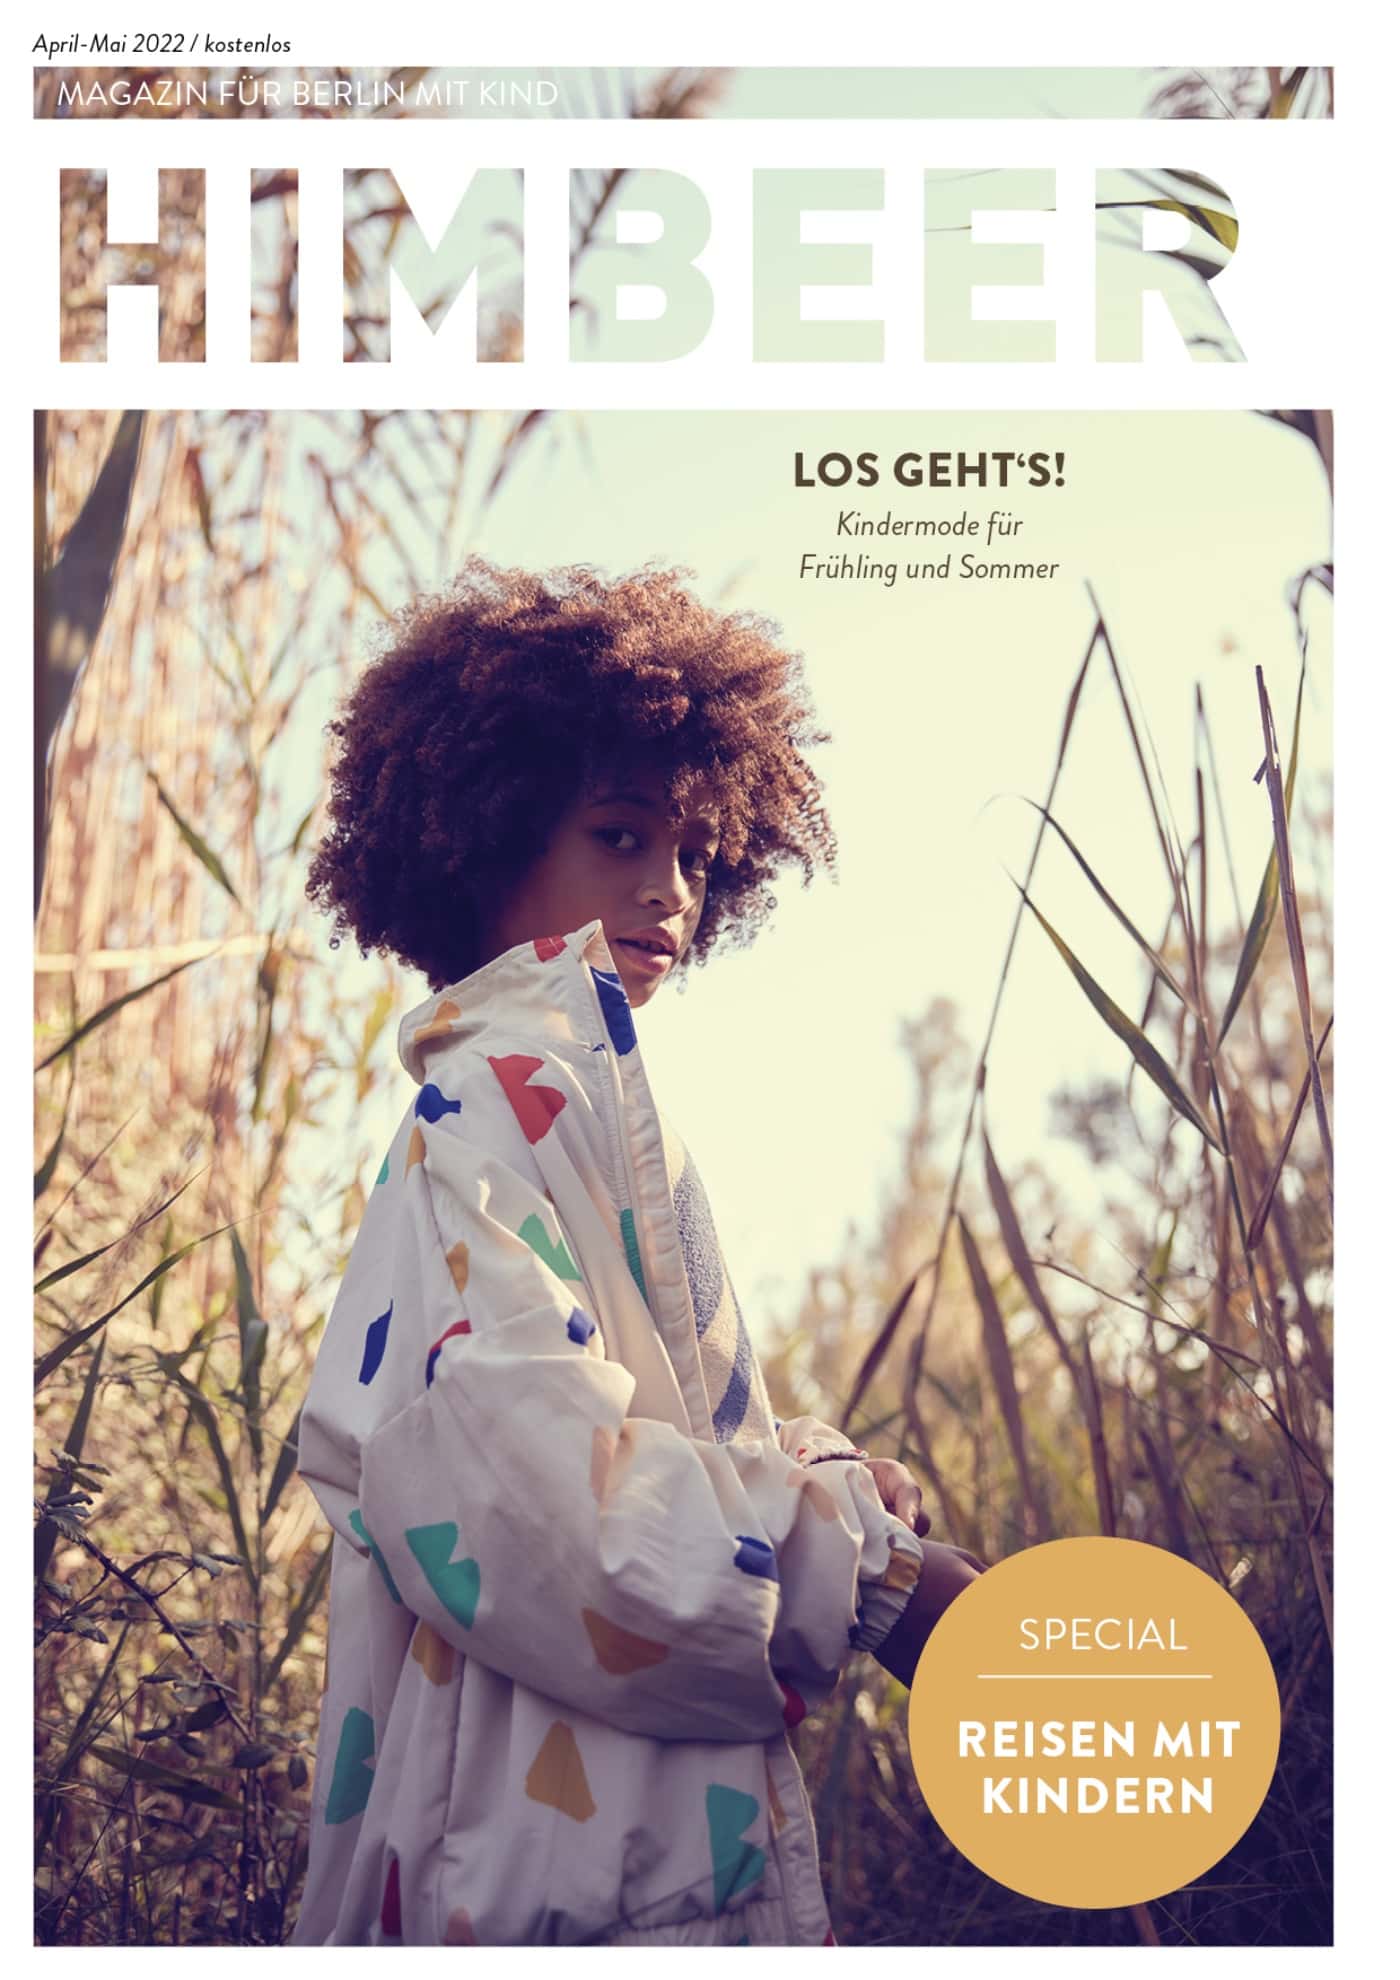 HIMBEER Magazin für BERLIN MIT Kind April-Mai 2022 // HIMBEER